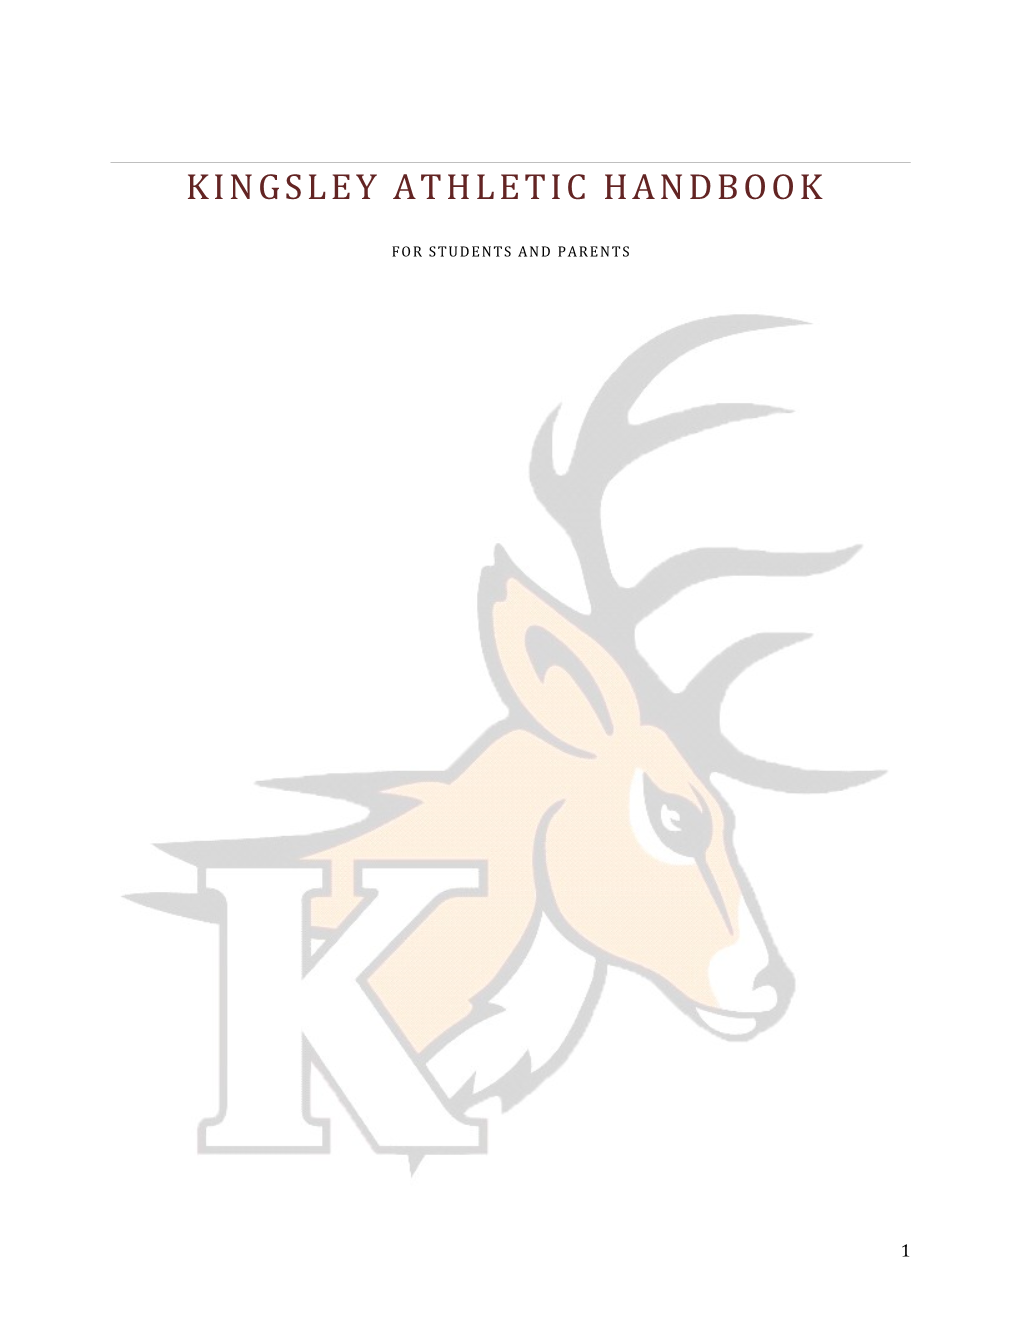 Kingsley Athletic Policy Handbook